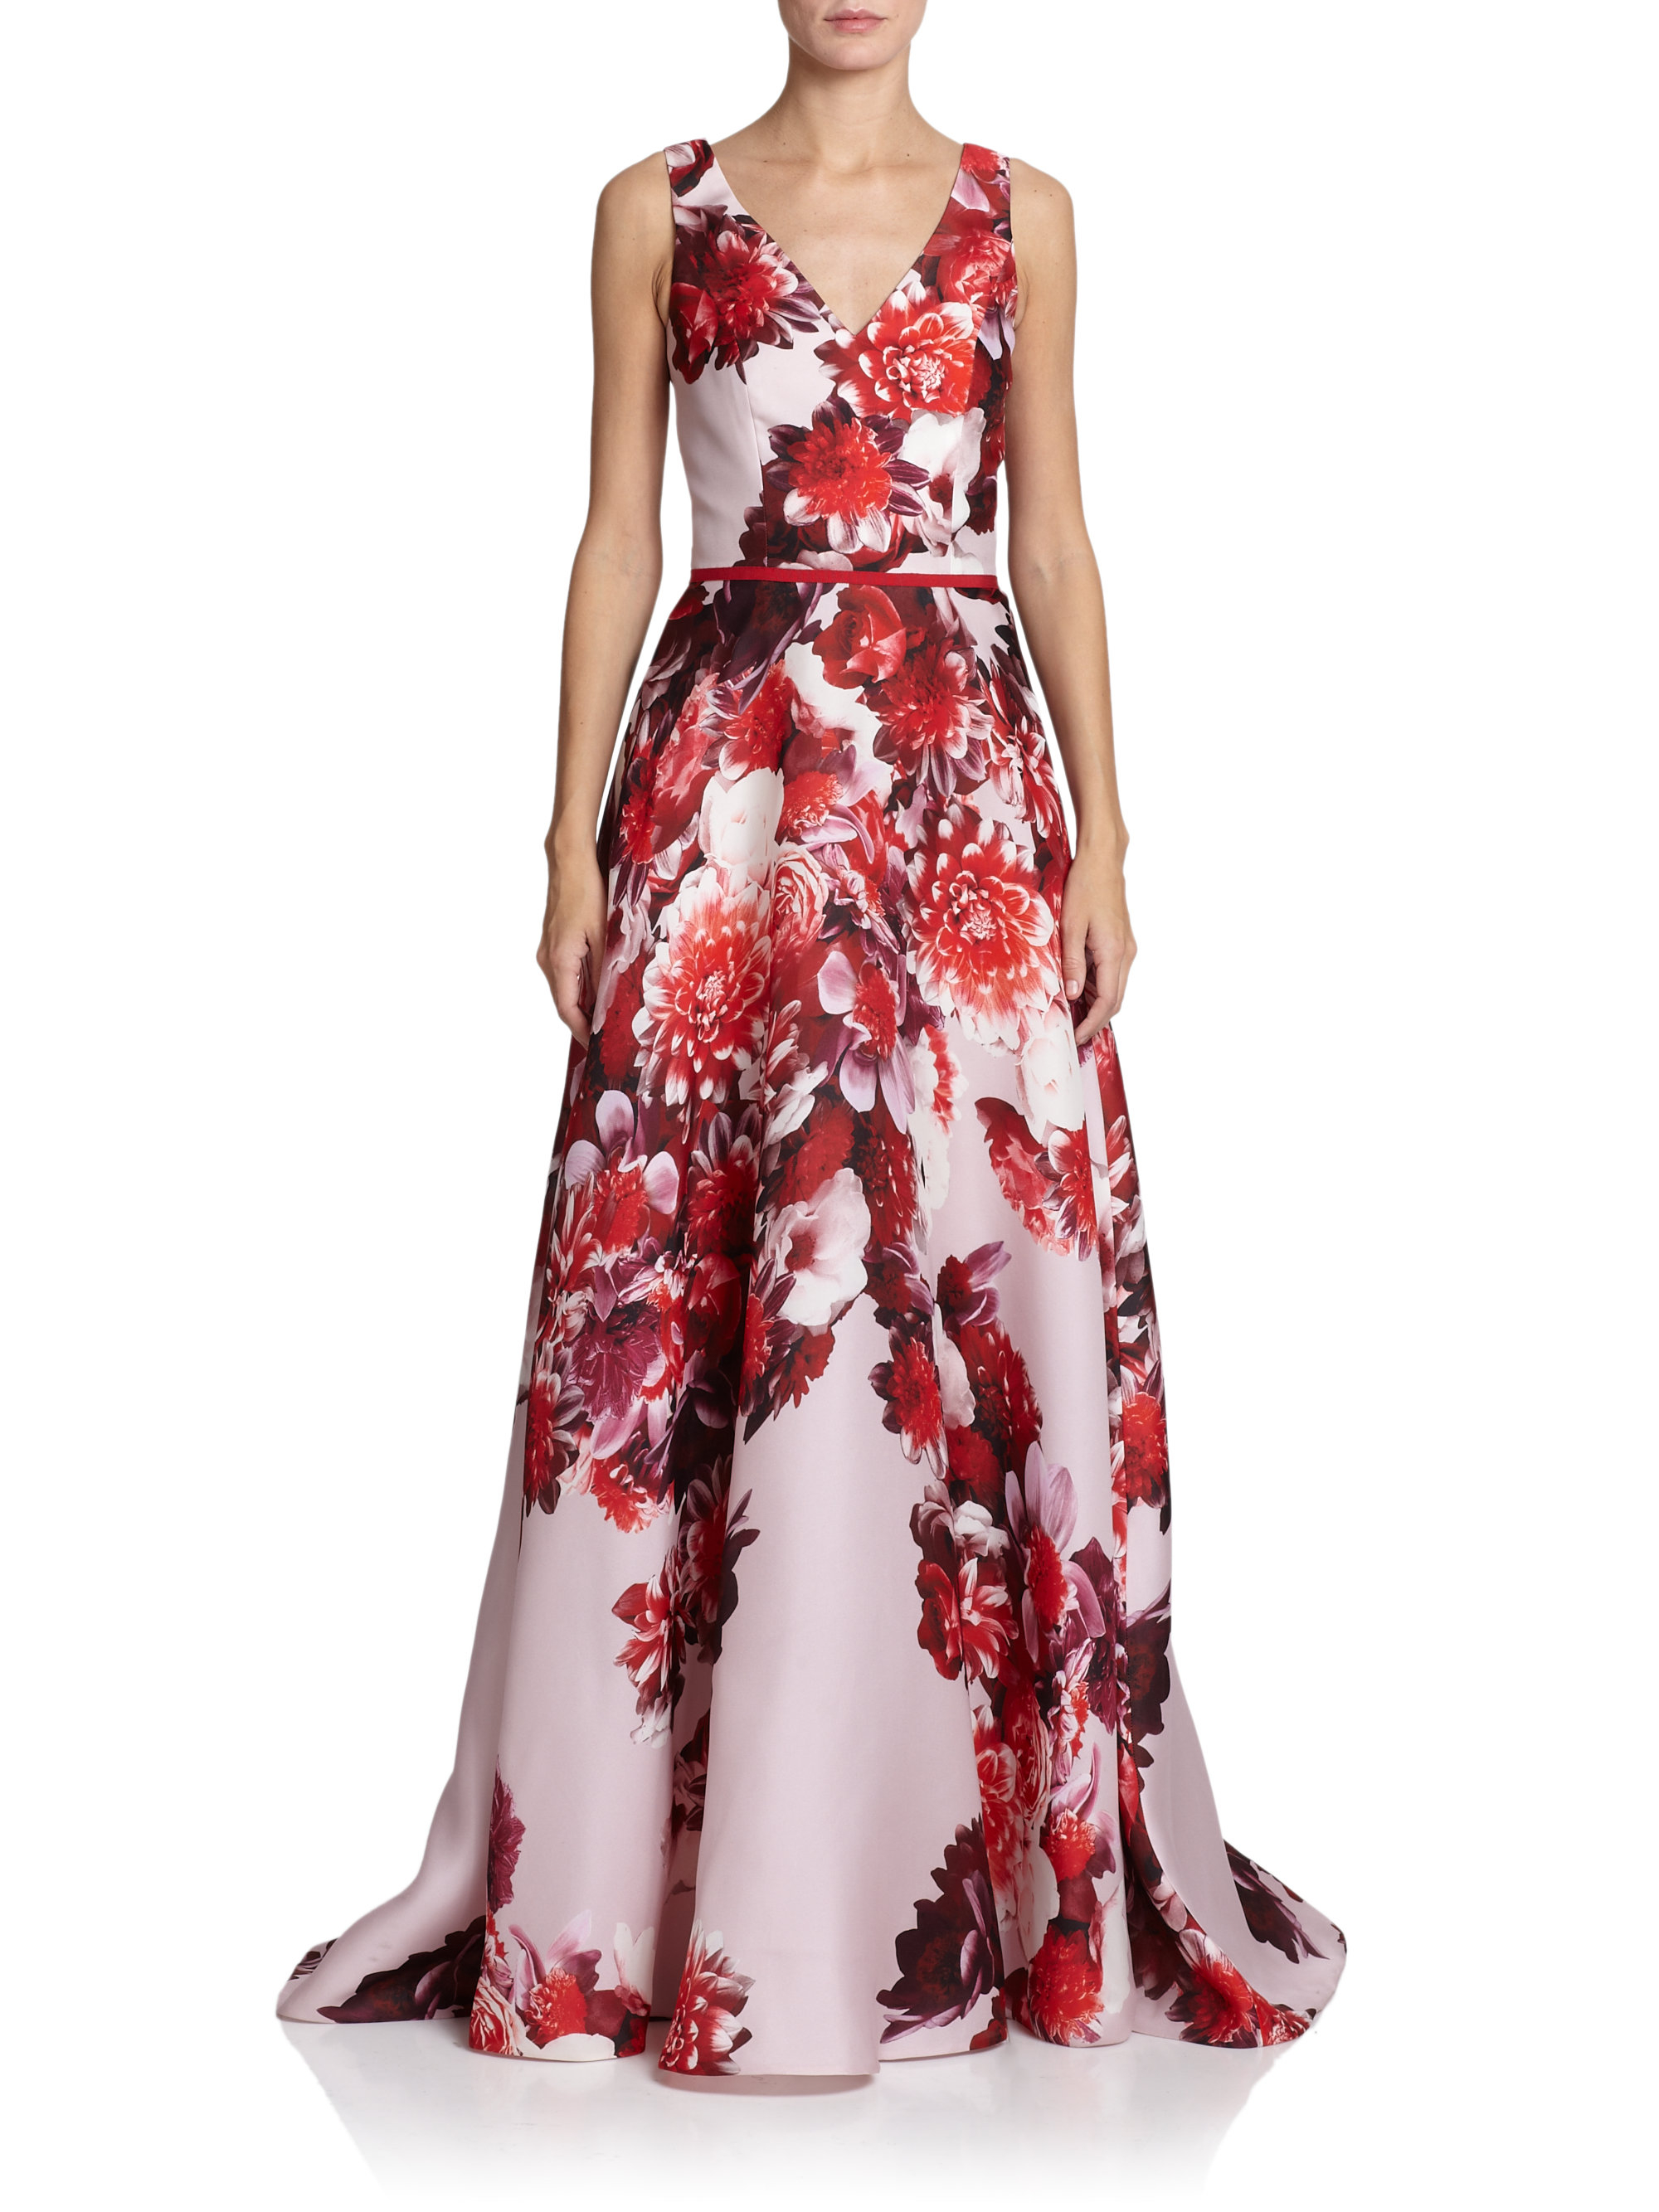 Carolina Herrera Floral Satin Gown in ...